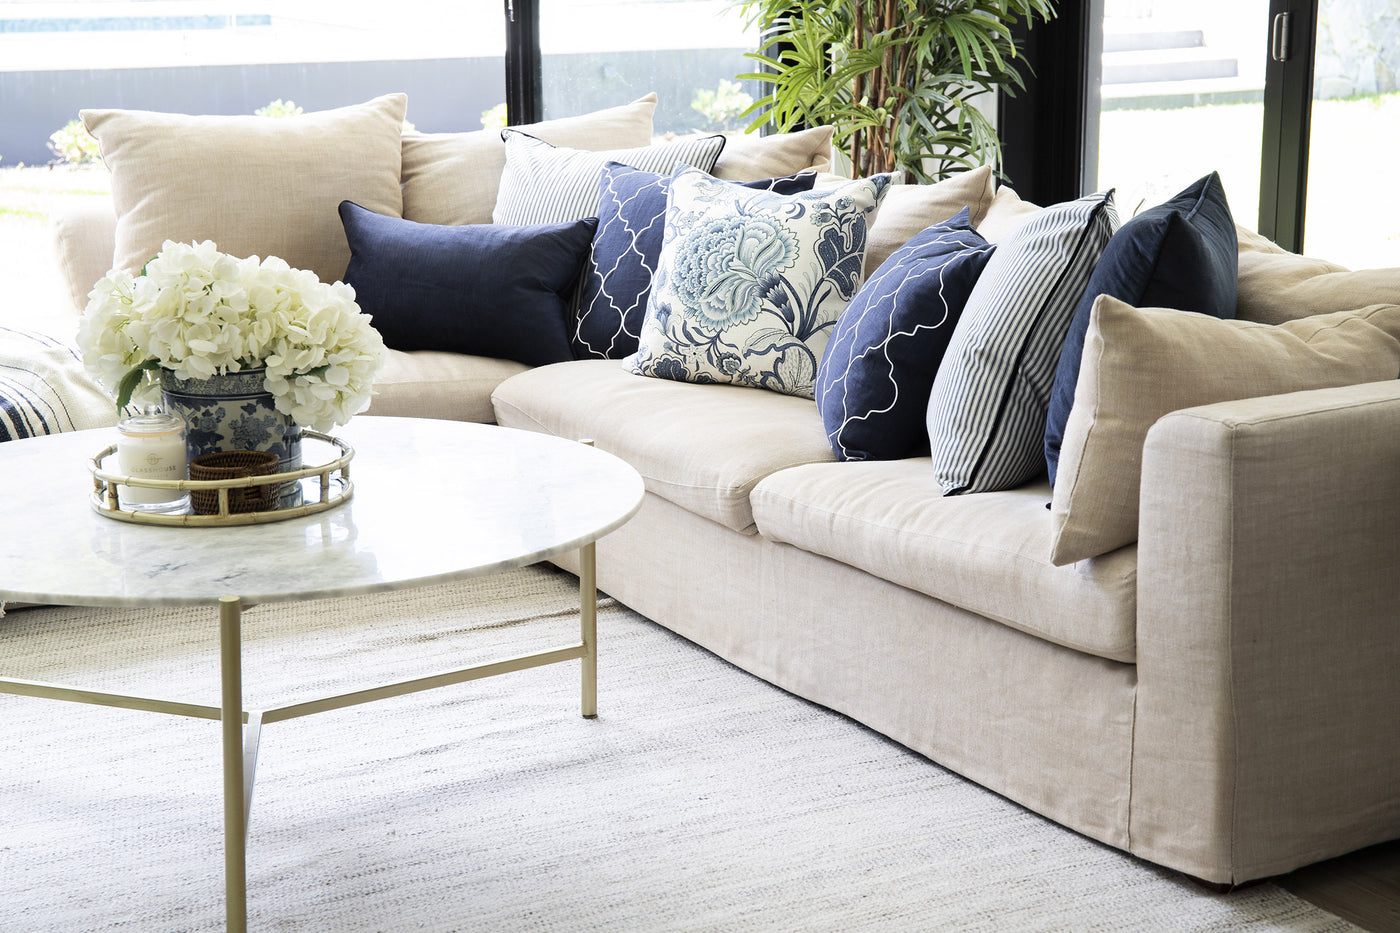 Blue & white cushions on a lounge